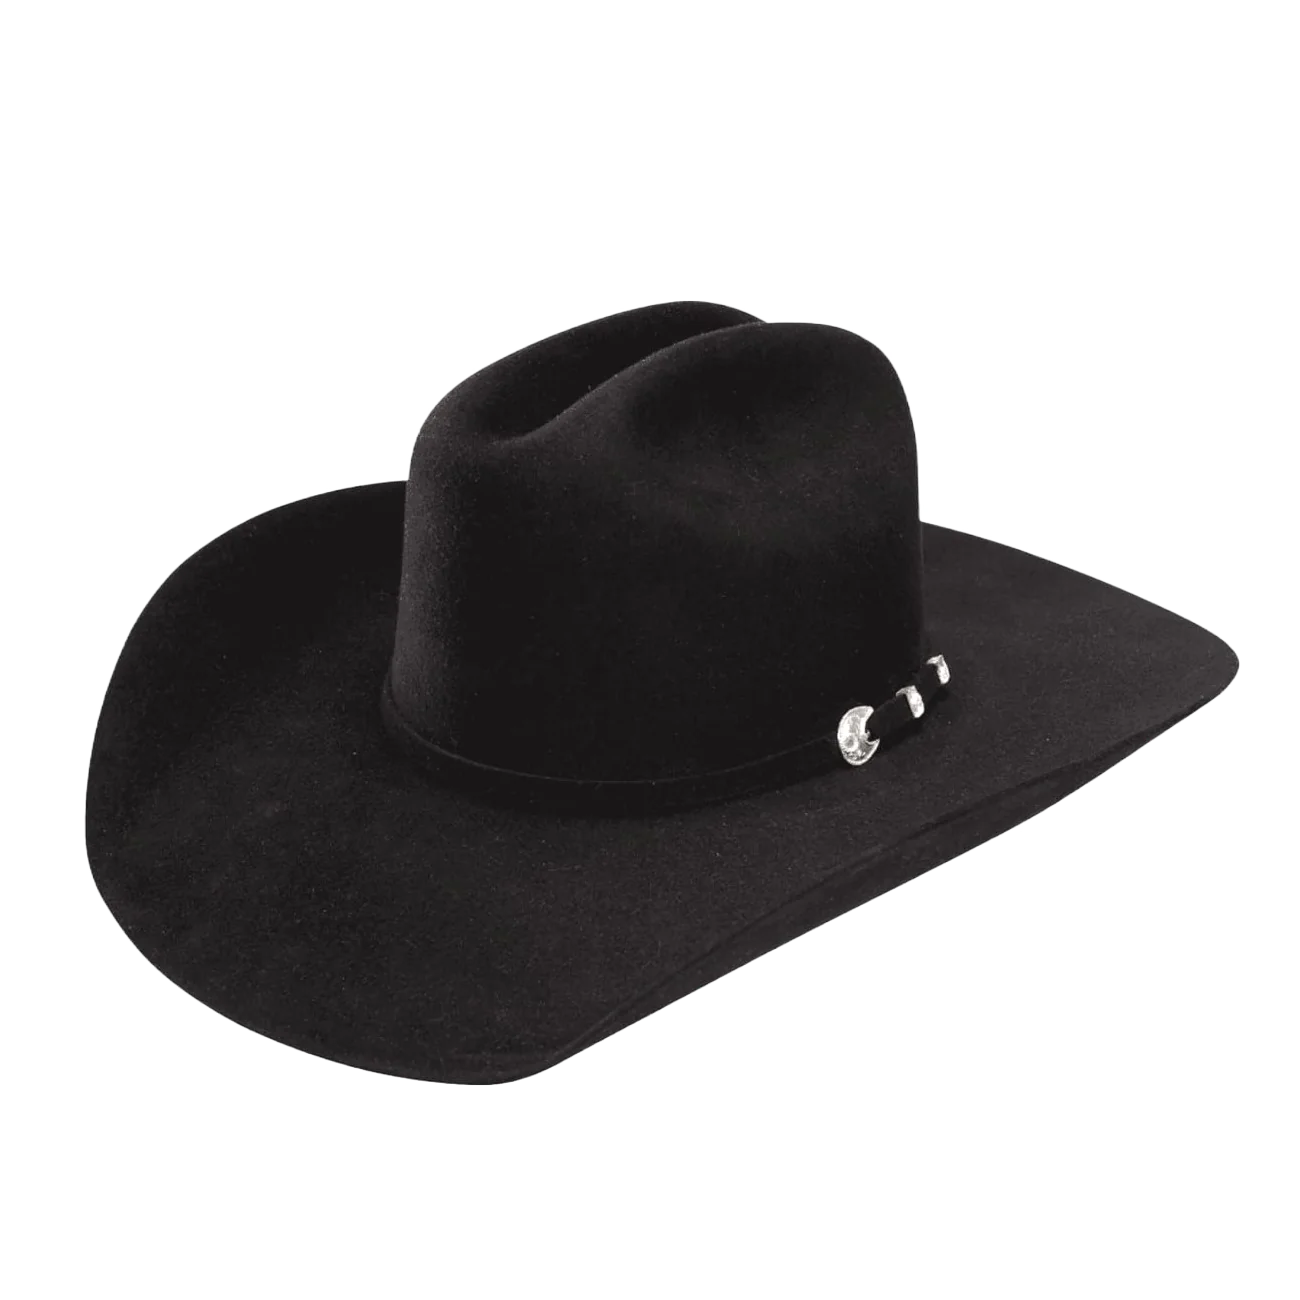 Stetson Corral Black 4X Felt Hat